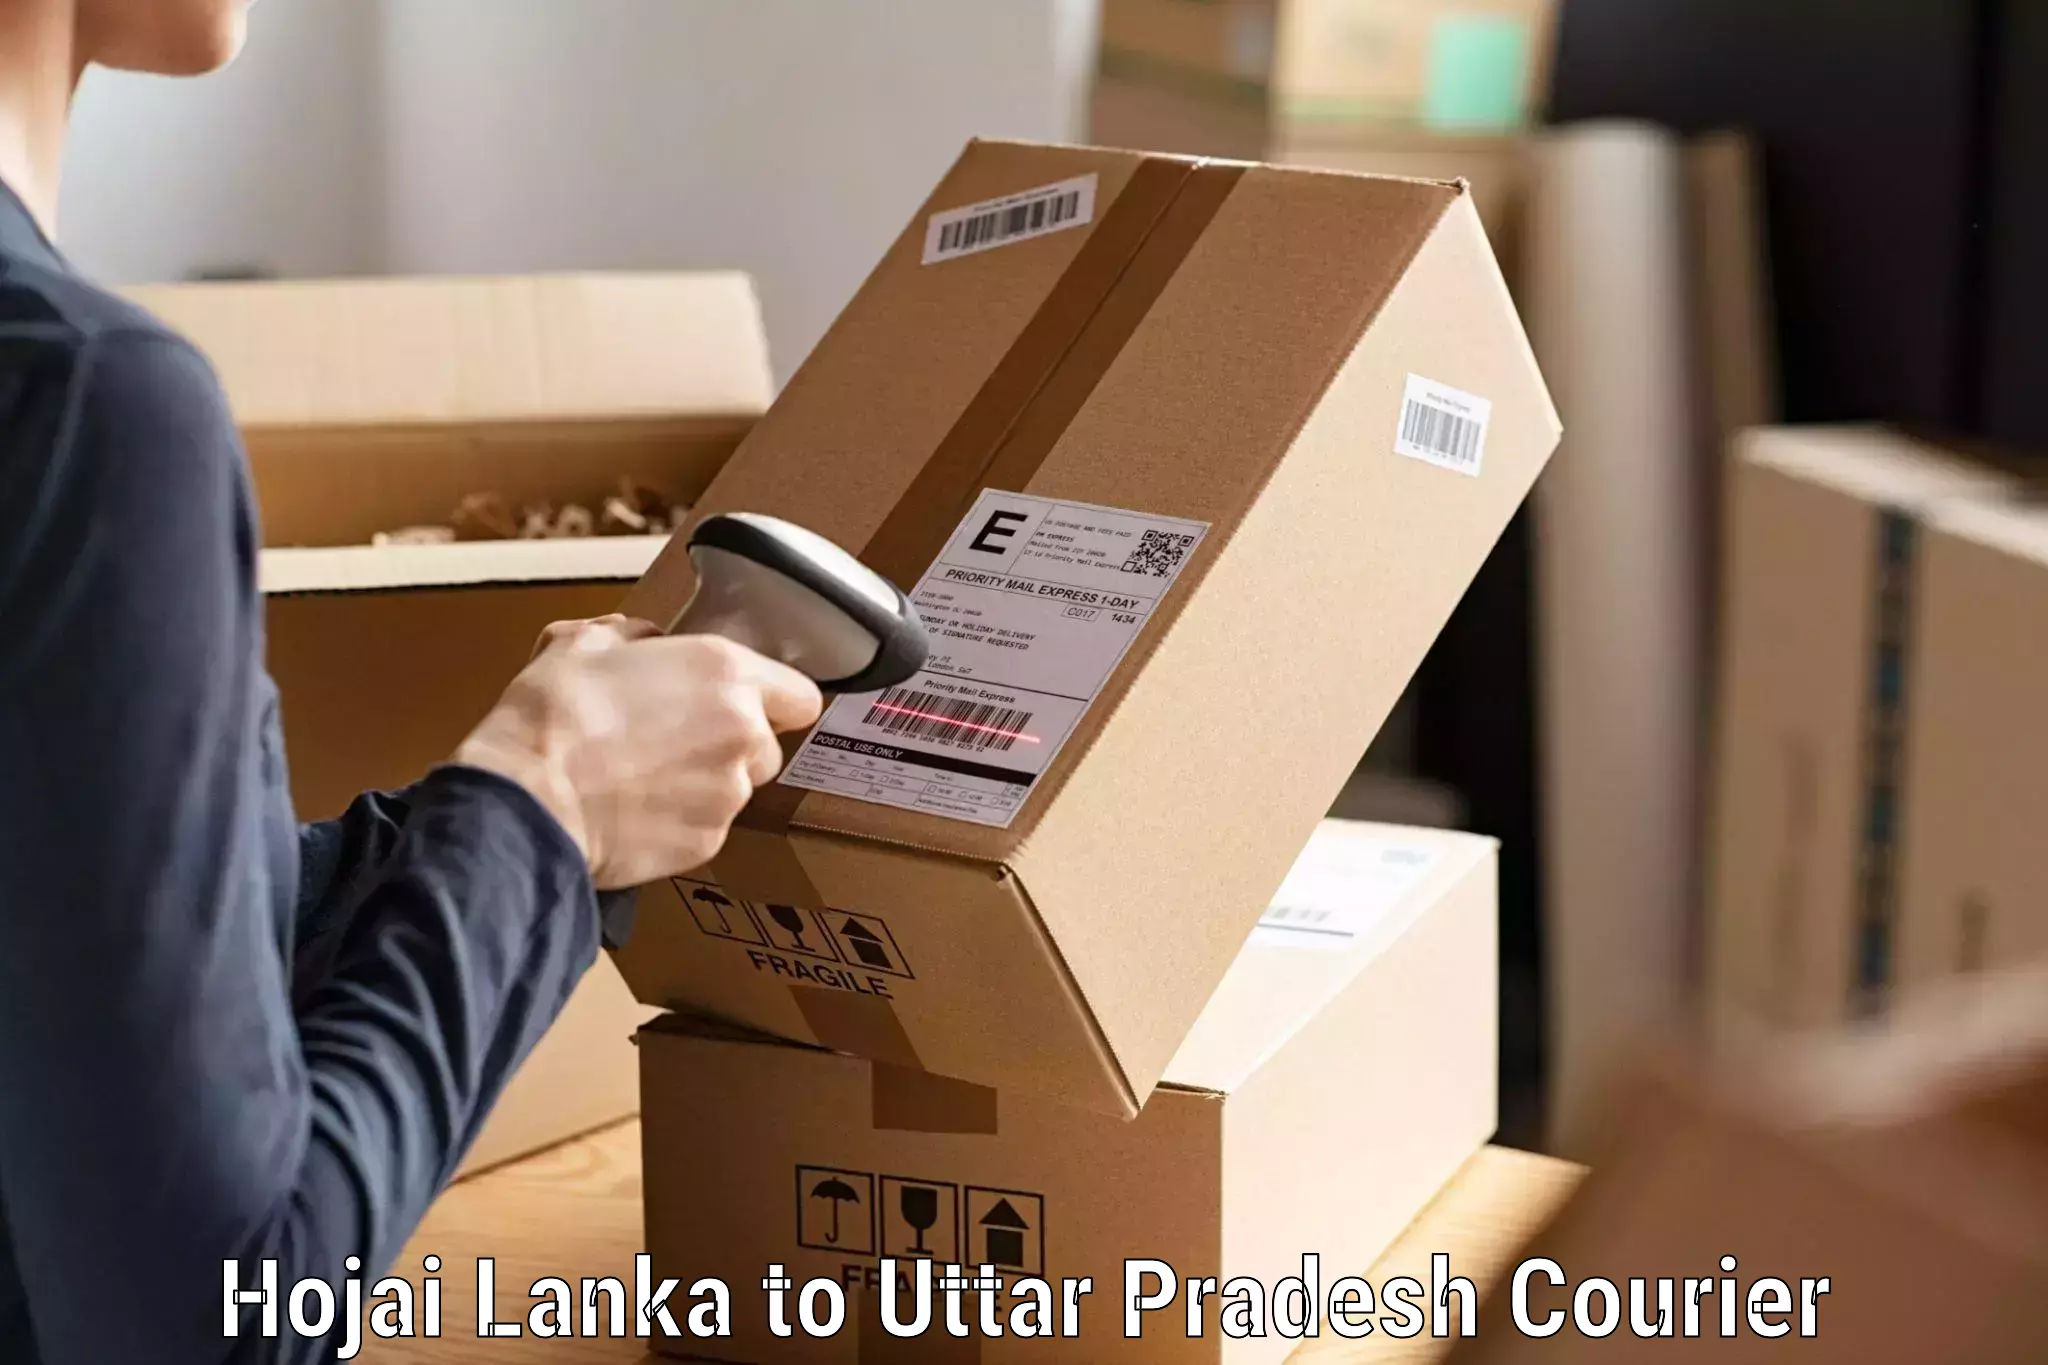 Professional parcel services Hojai Lanka to Mirzapur